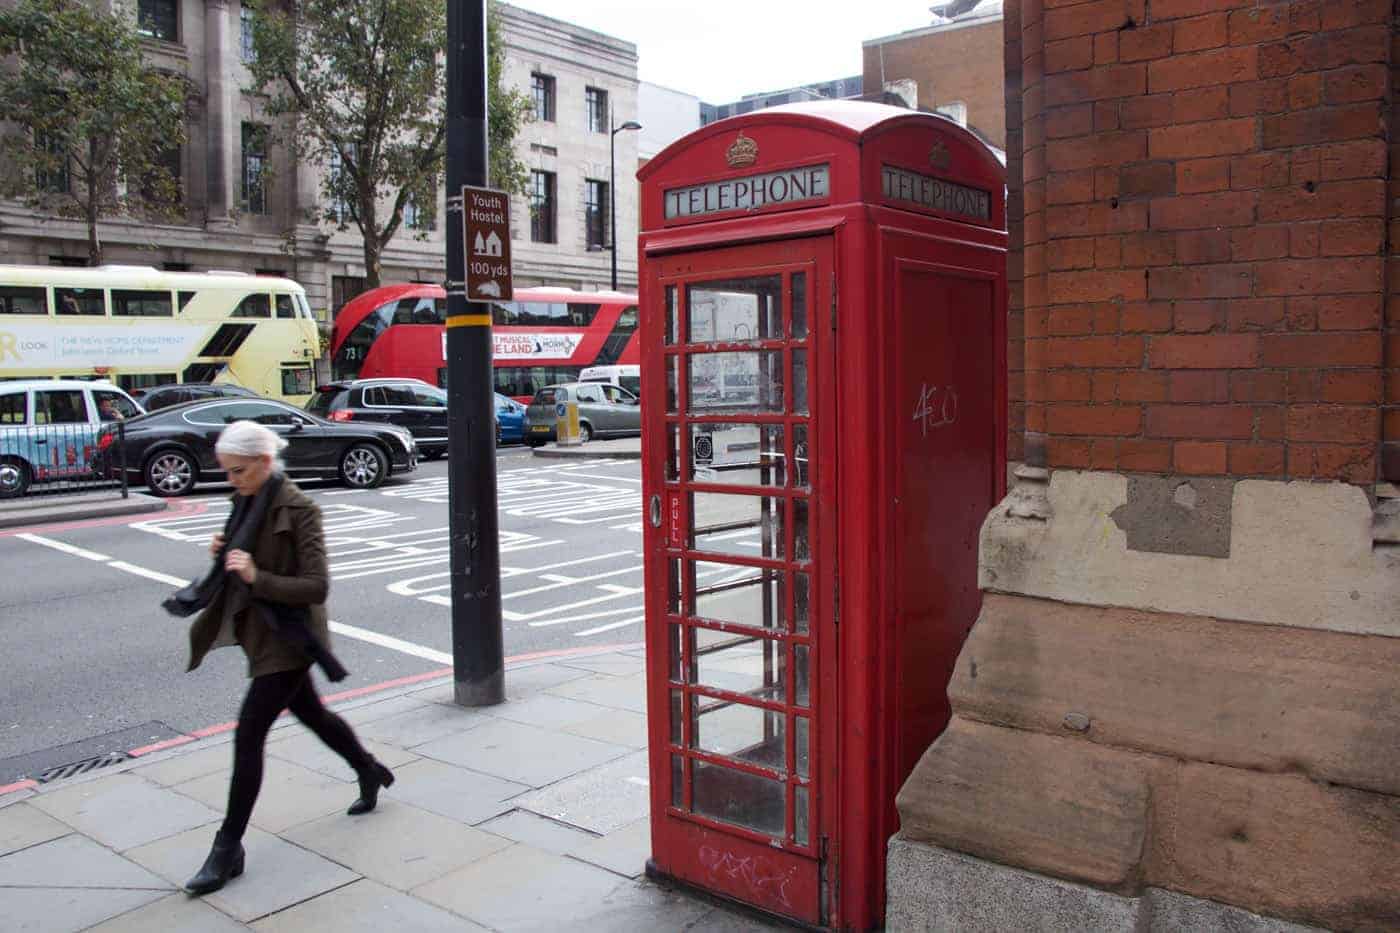 london phone booth